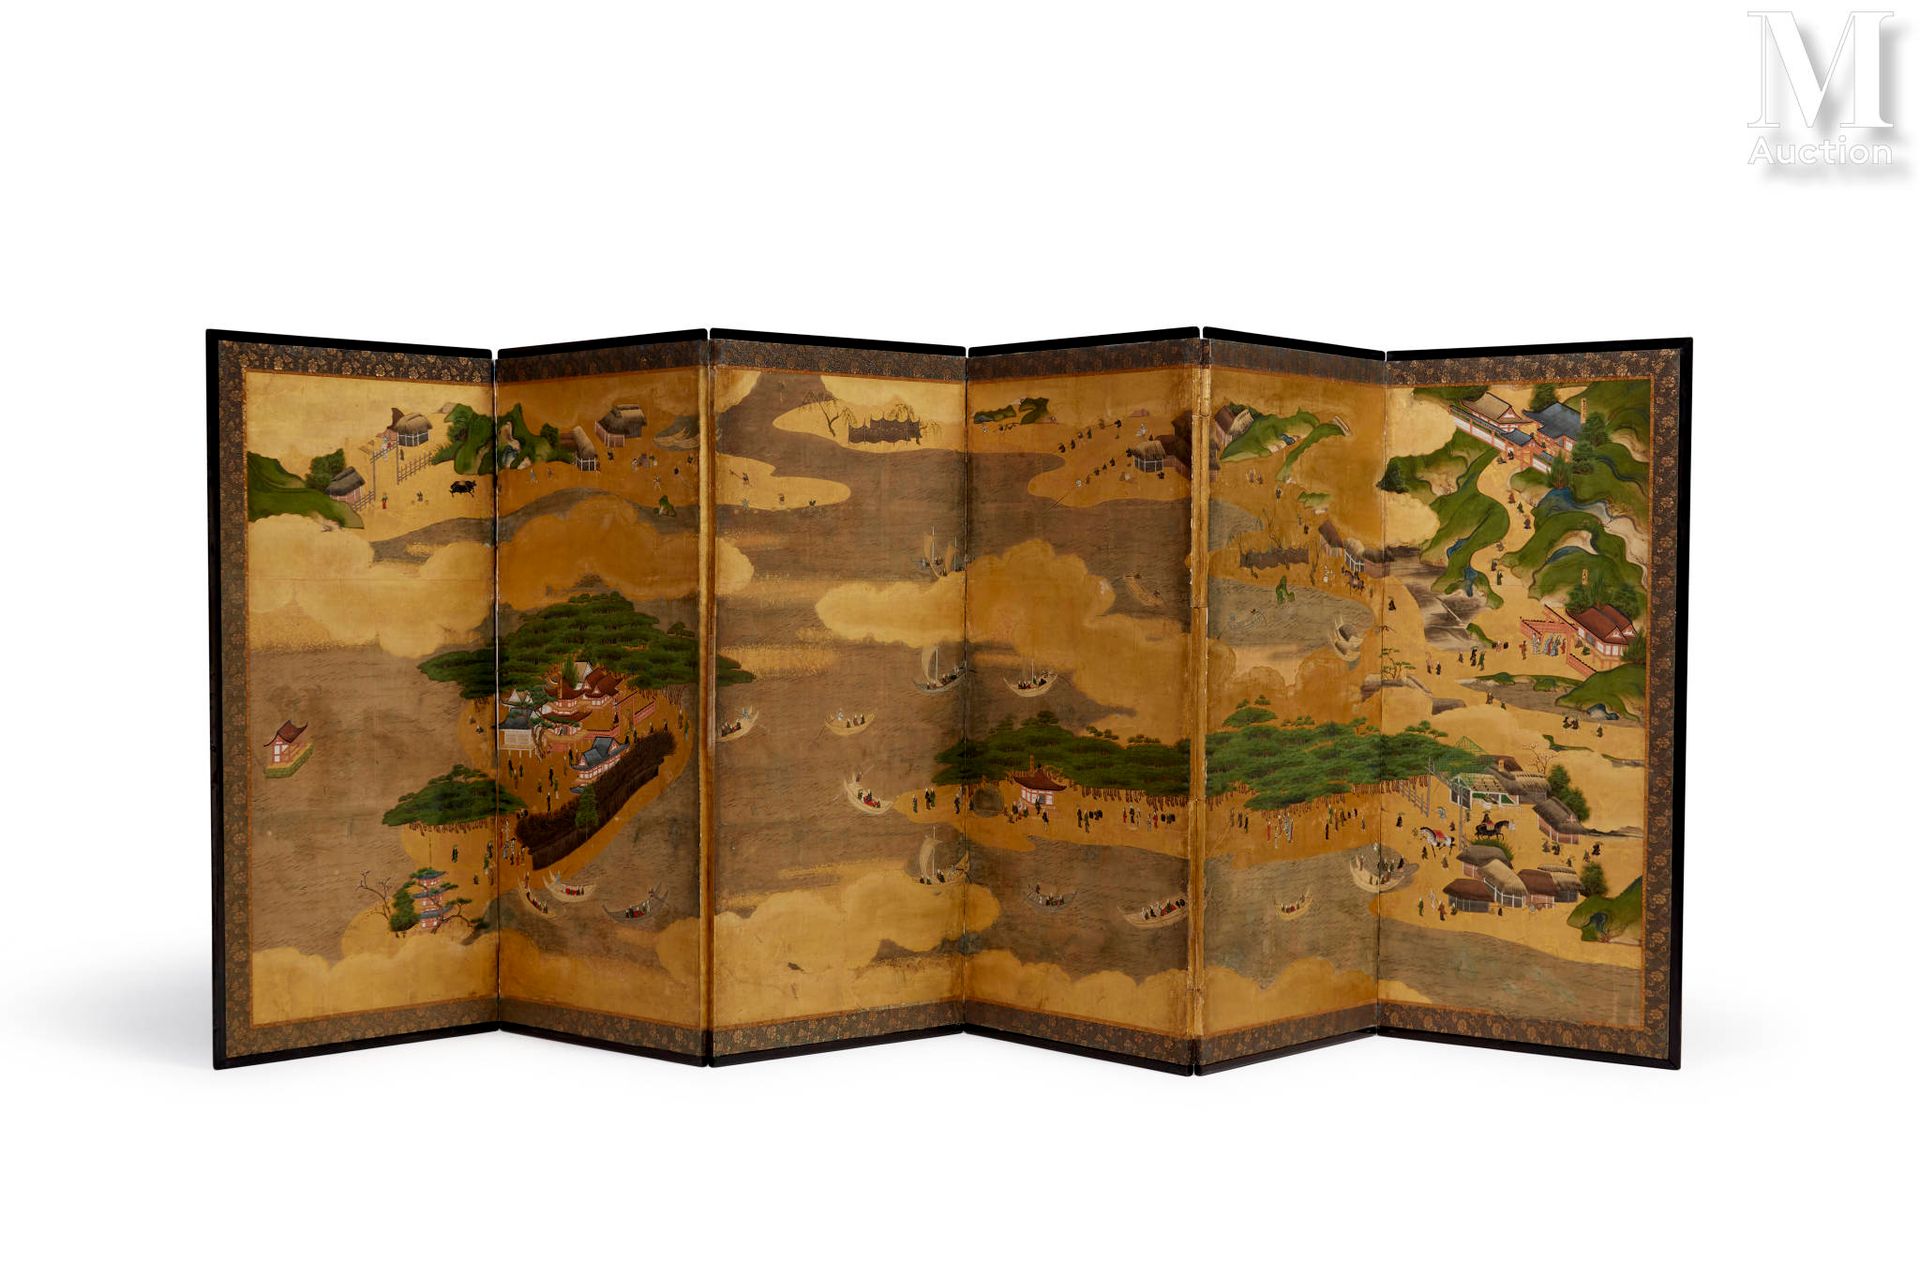 JAPON, Période Momoyama (1573-1715), début du XVIIe siècle 非常罕见的一对六叶折叠屏风

山水画装饰，&hellip;